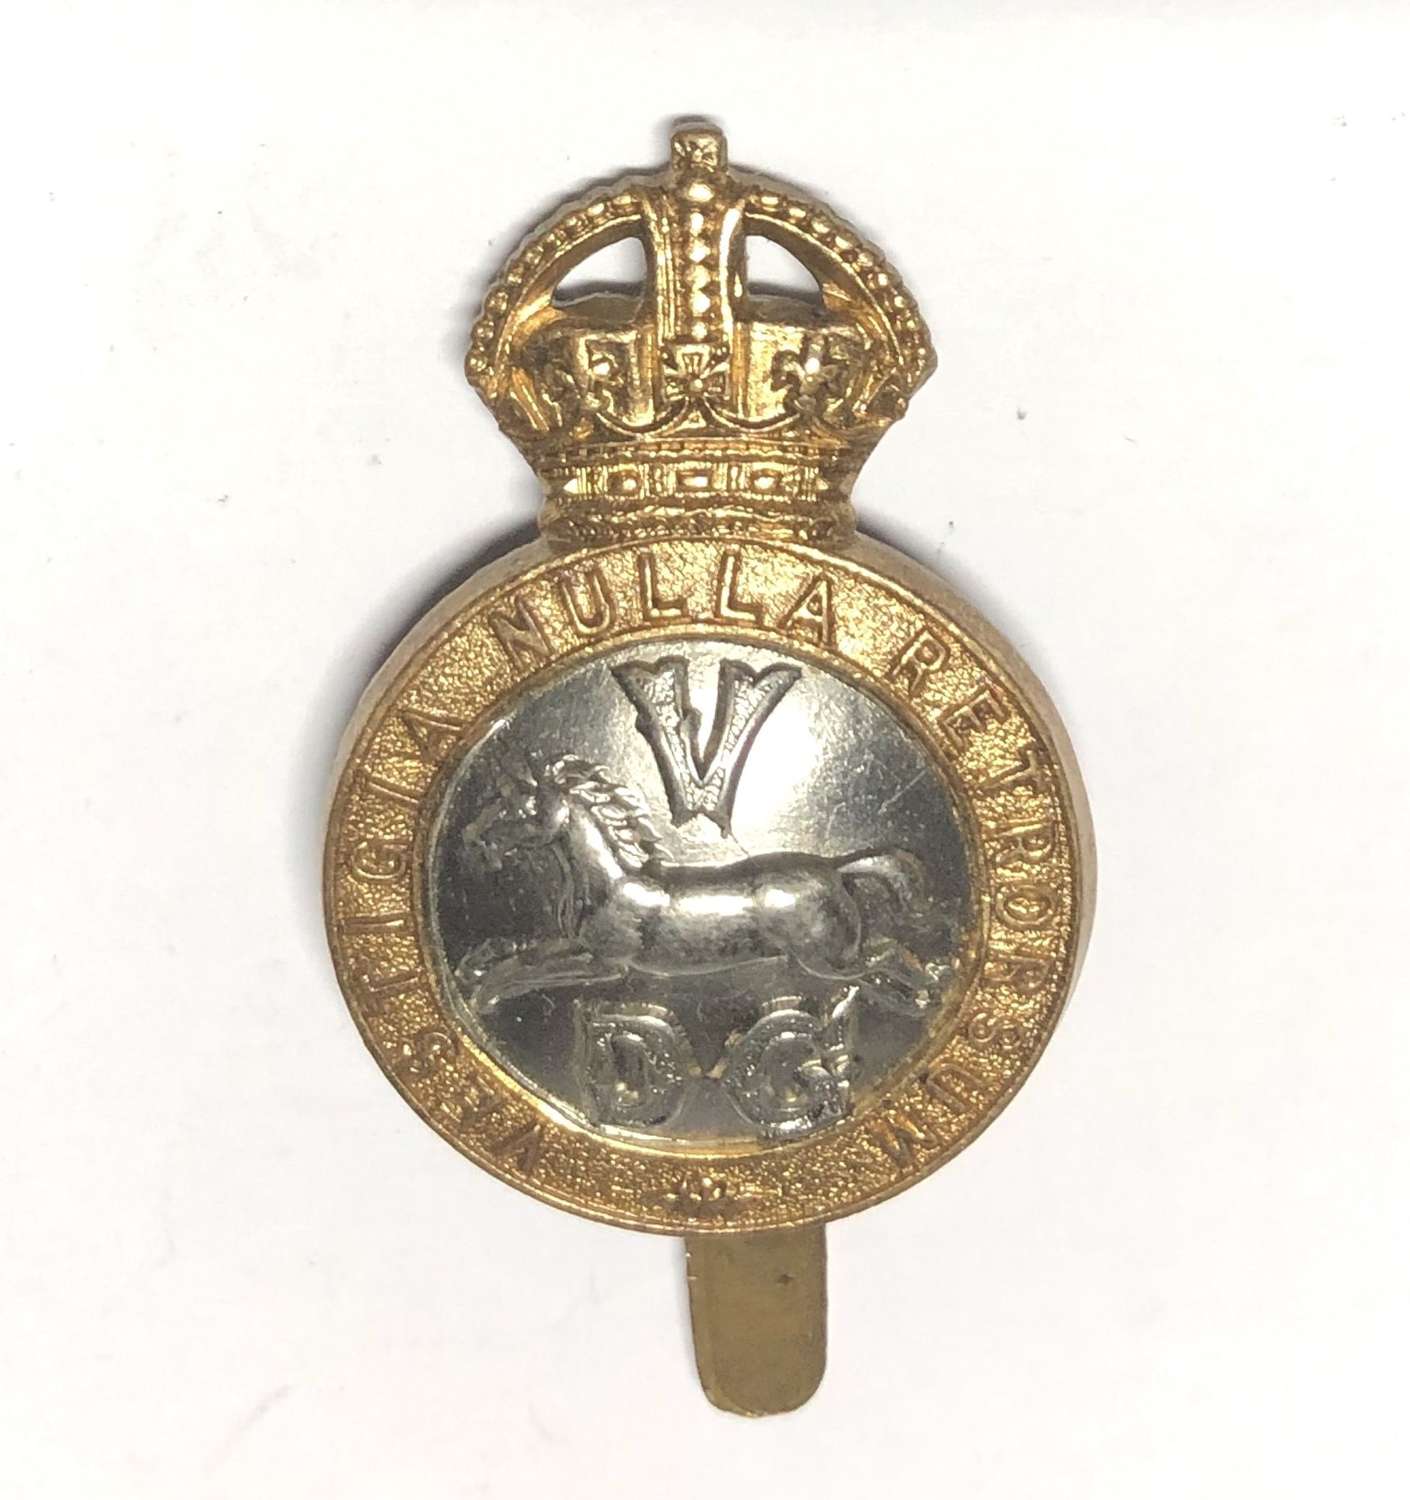 5th Dragoon Guards cap badge c1901-1922